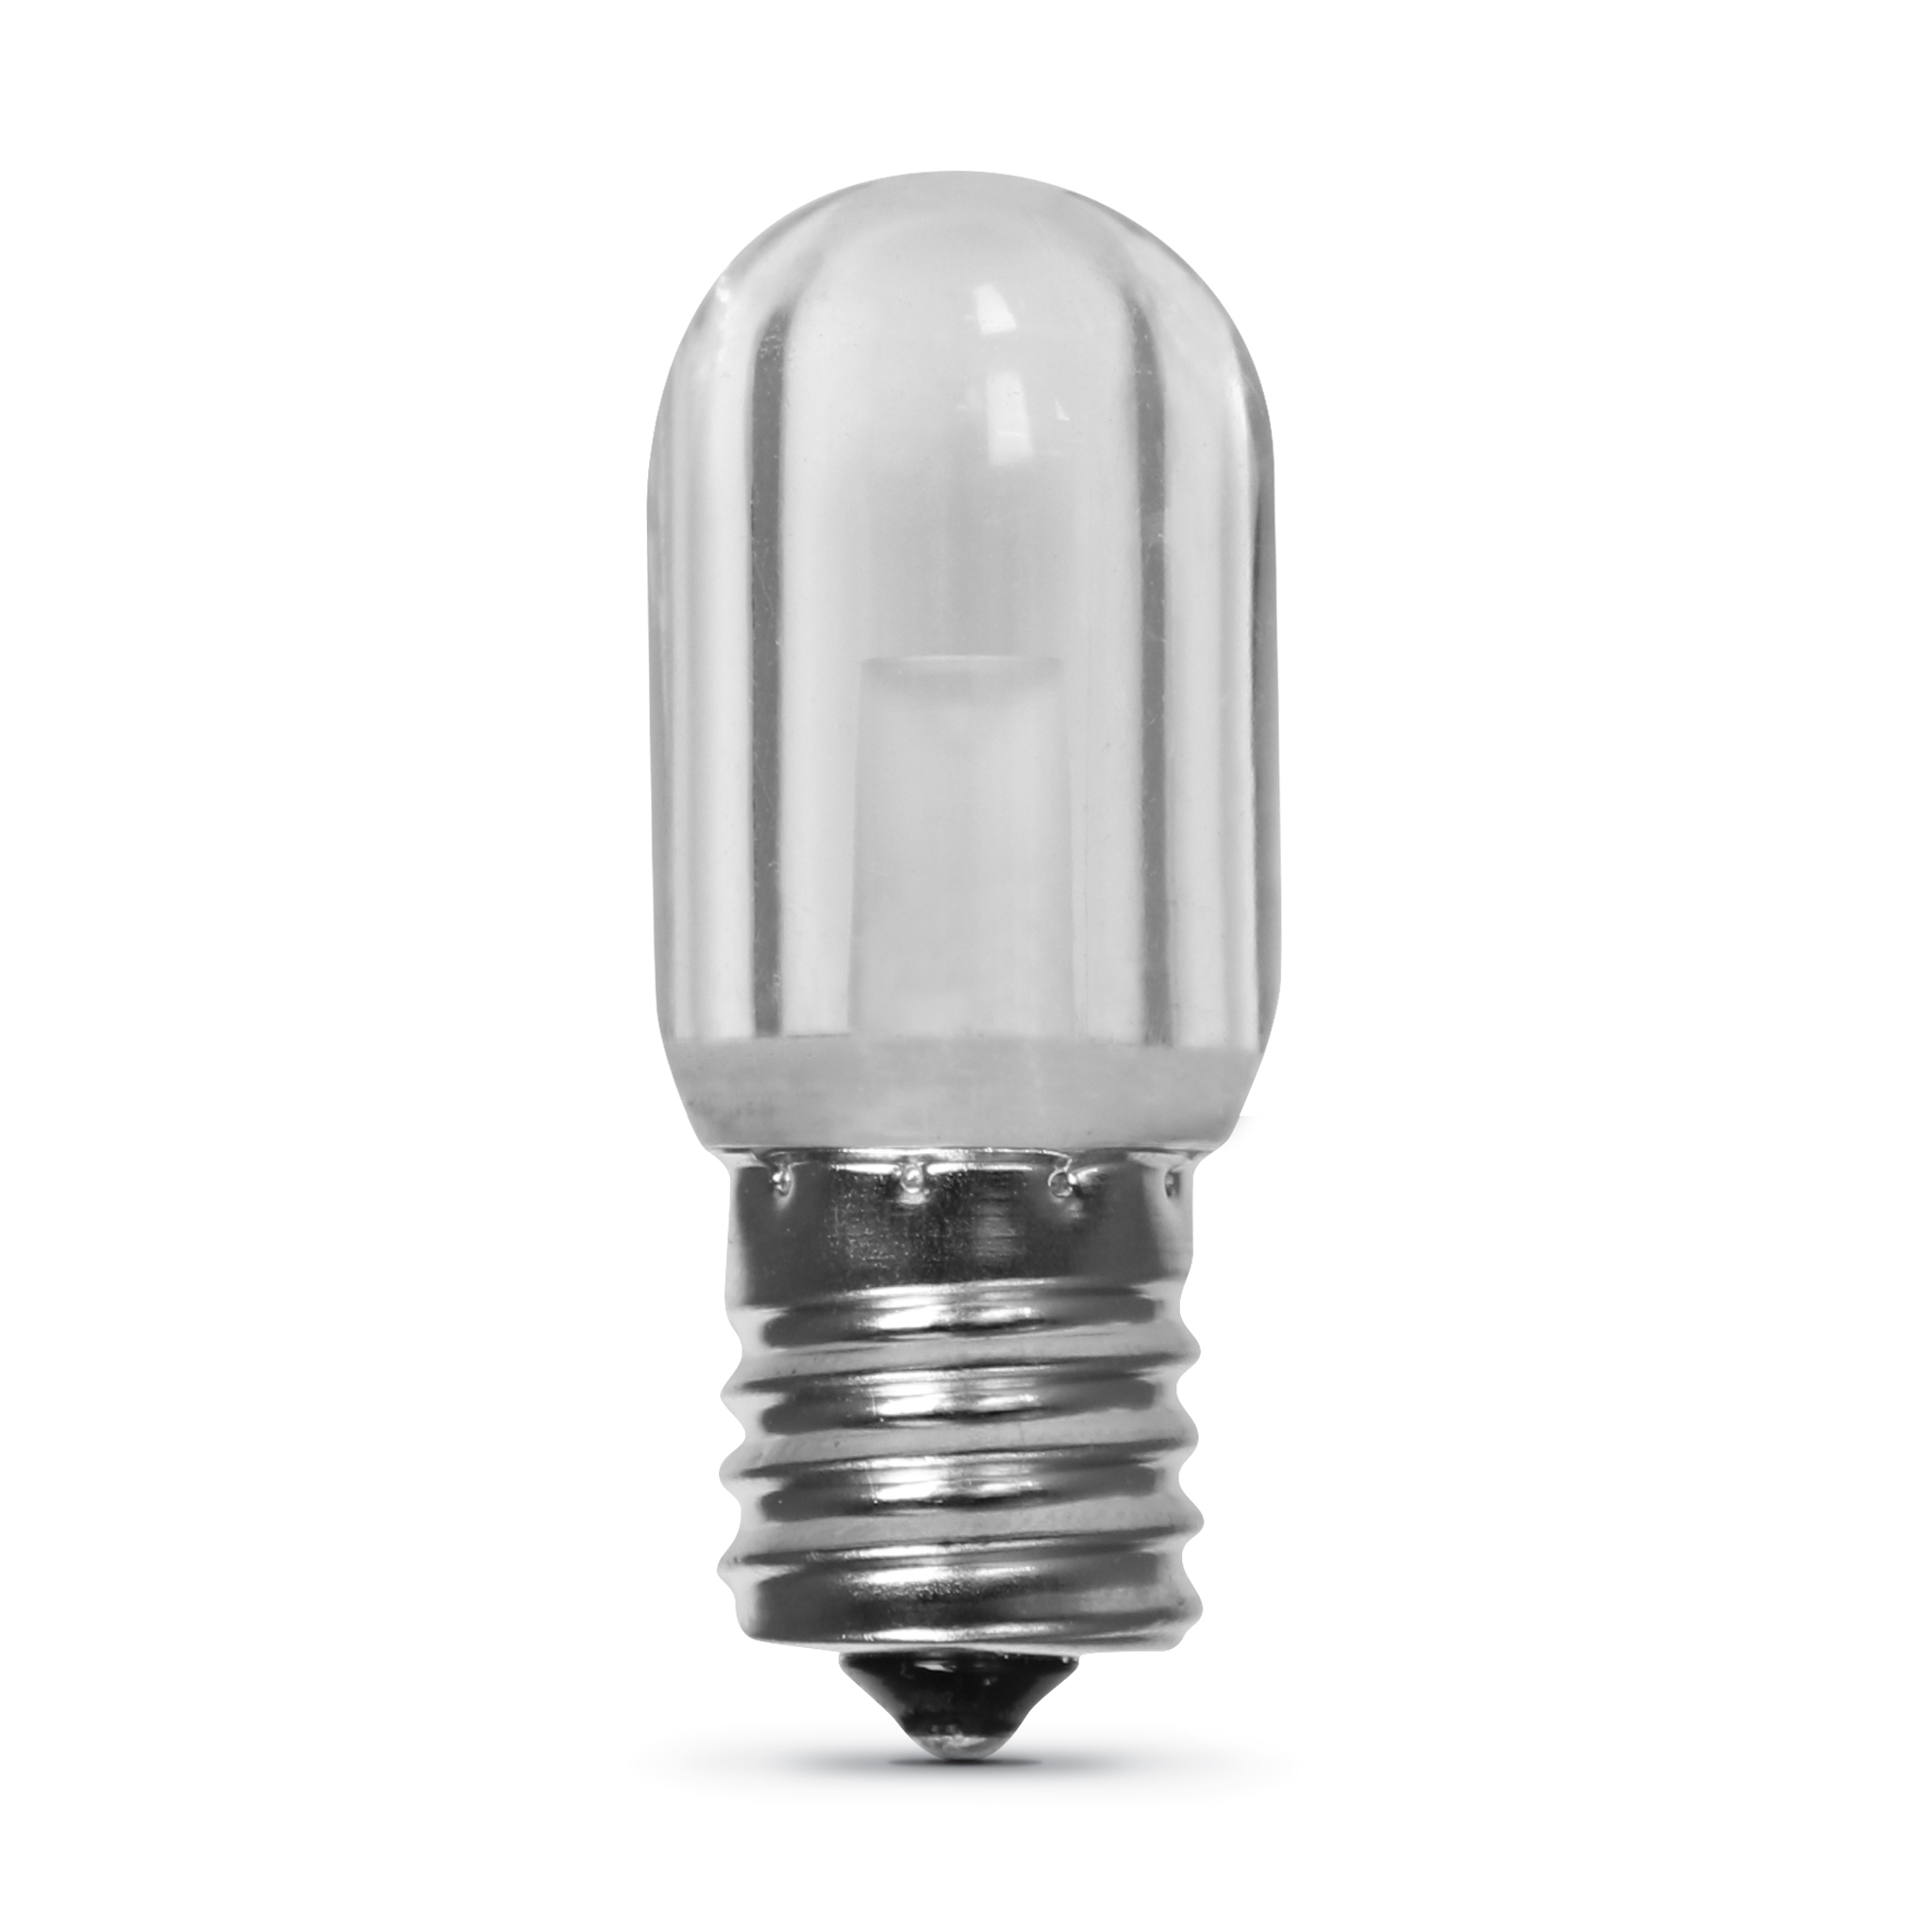 BPT7N/SU/LED LED Lamp, Linear, T7 Lamp, 15 W Equivalent, E17 Lamp Base, Clear, Warm White Light